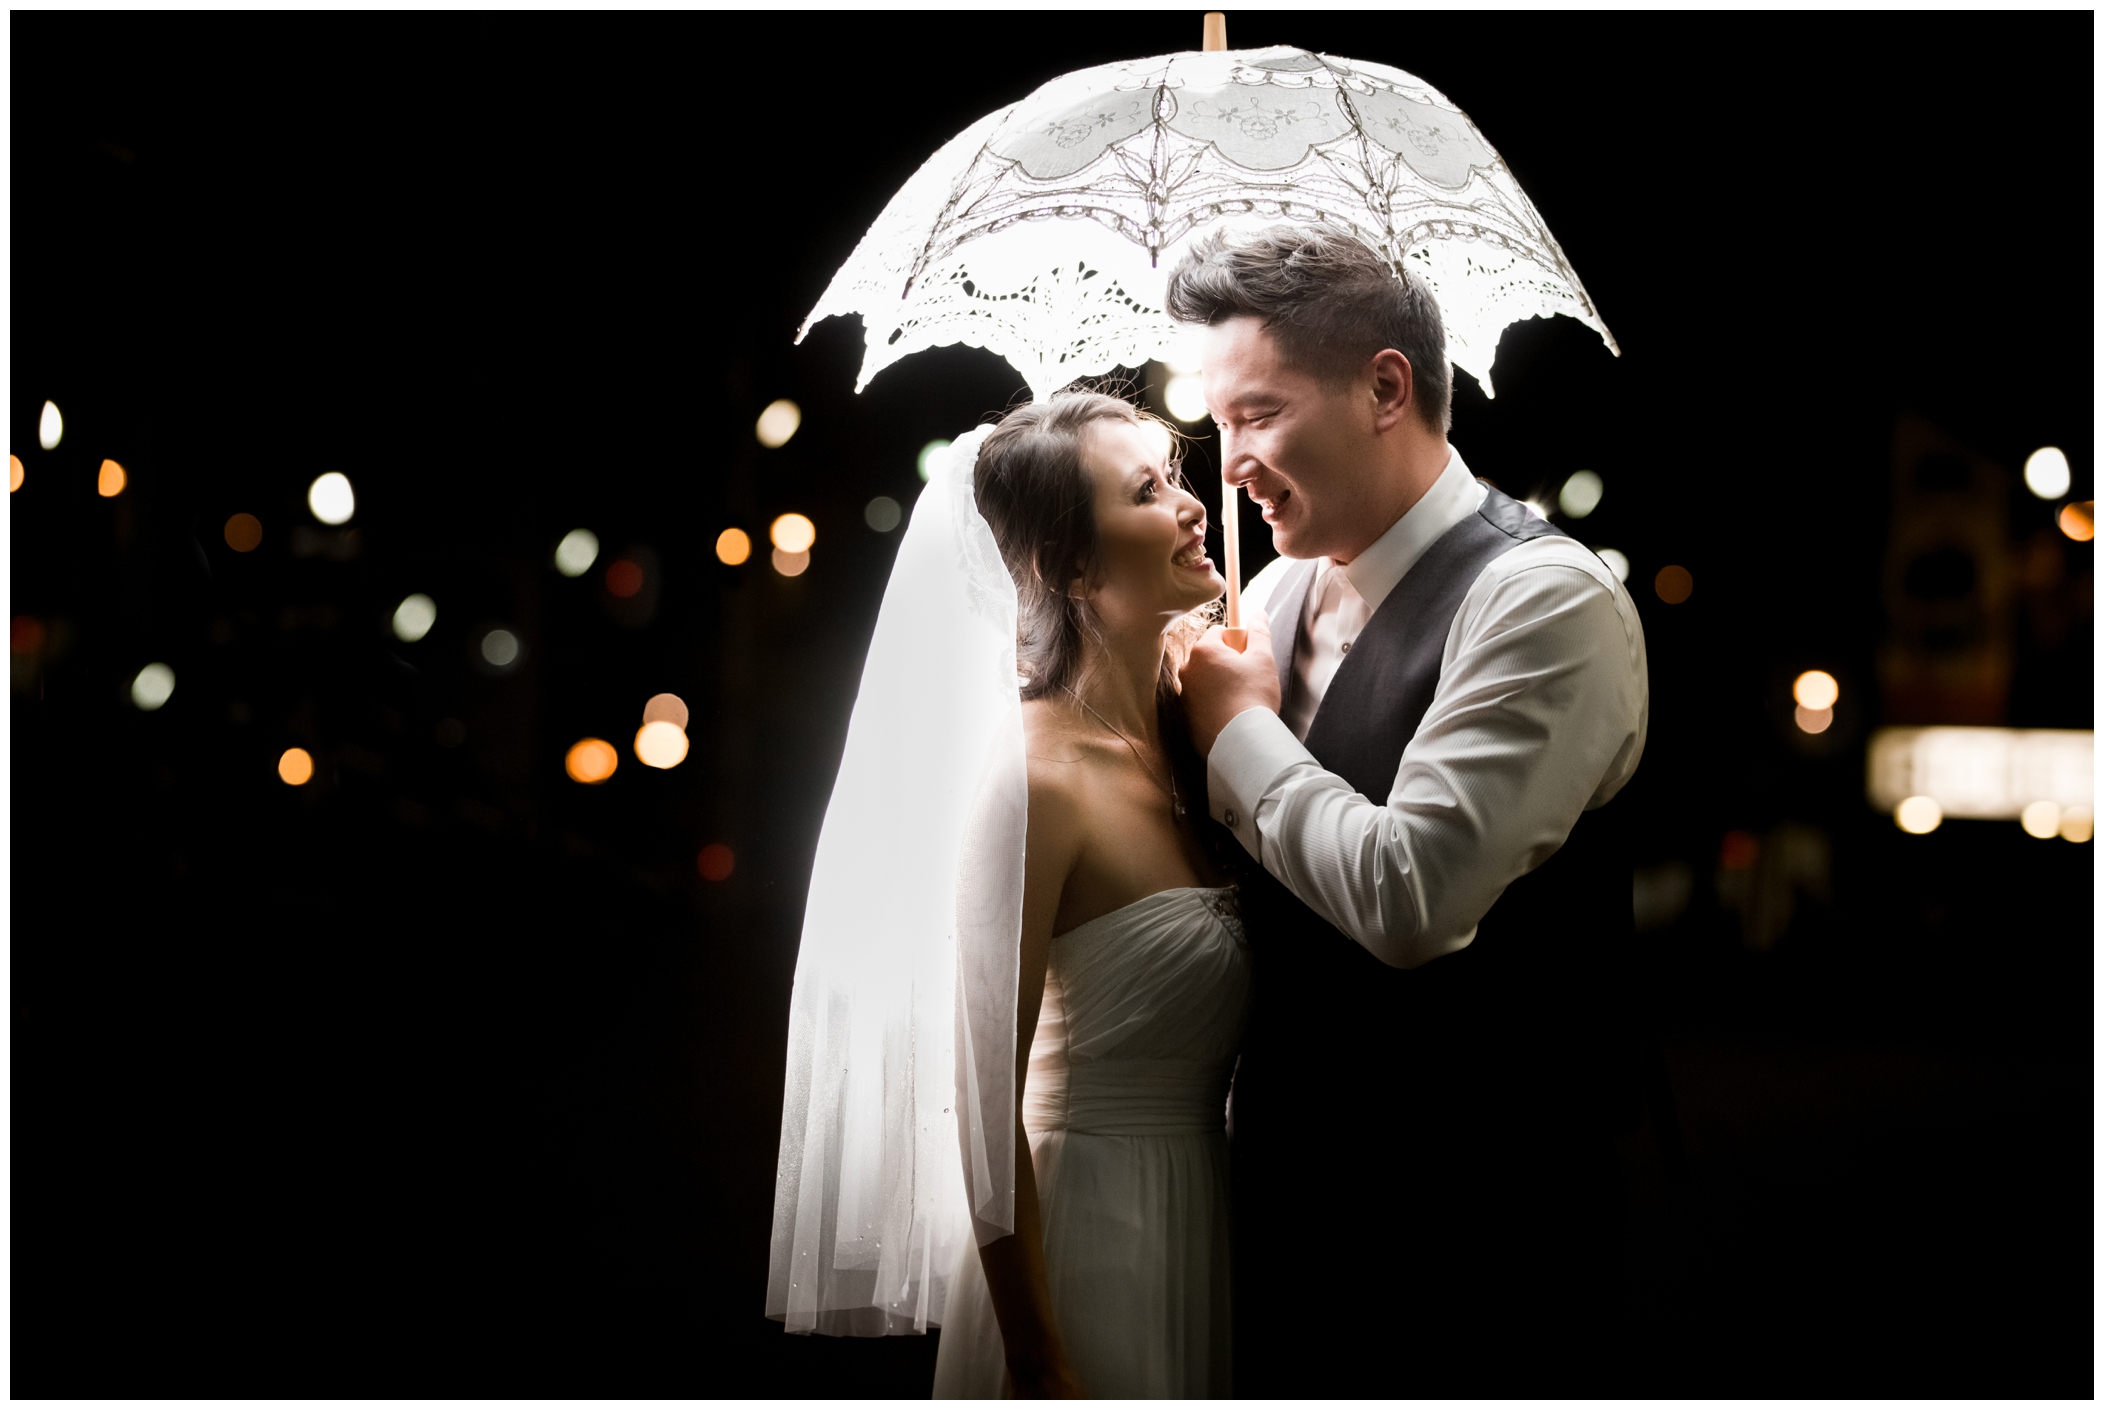 nighttime wedding photos by Denver photographer Plum Pretty Photography 